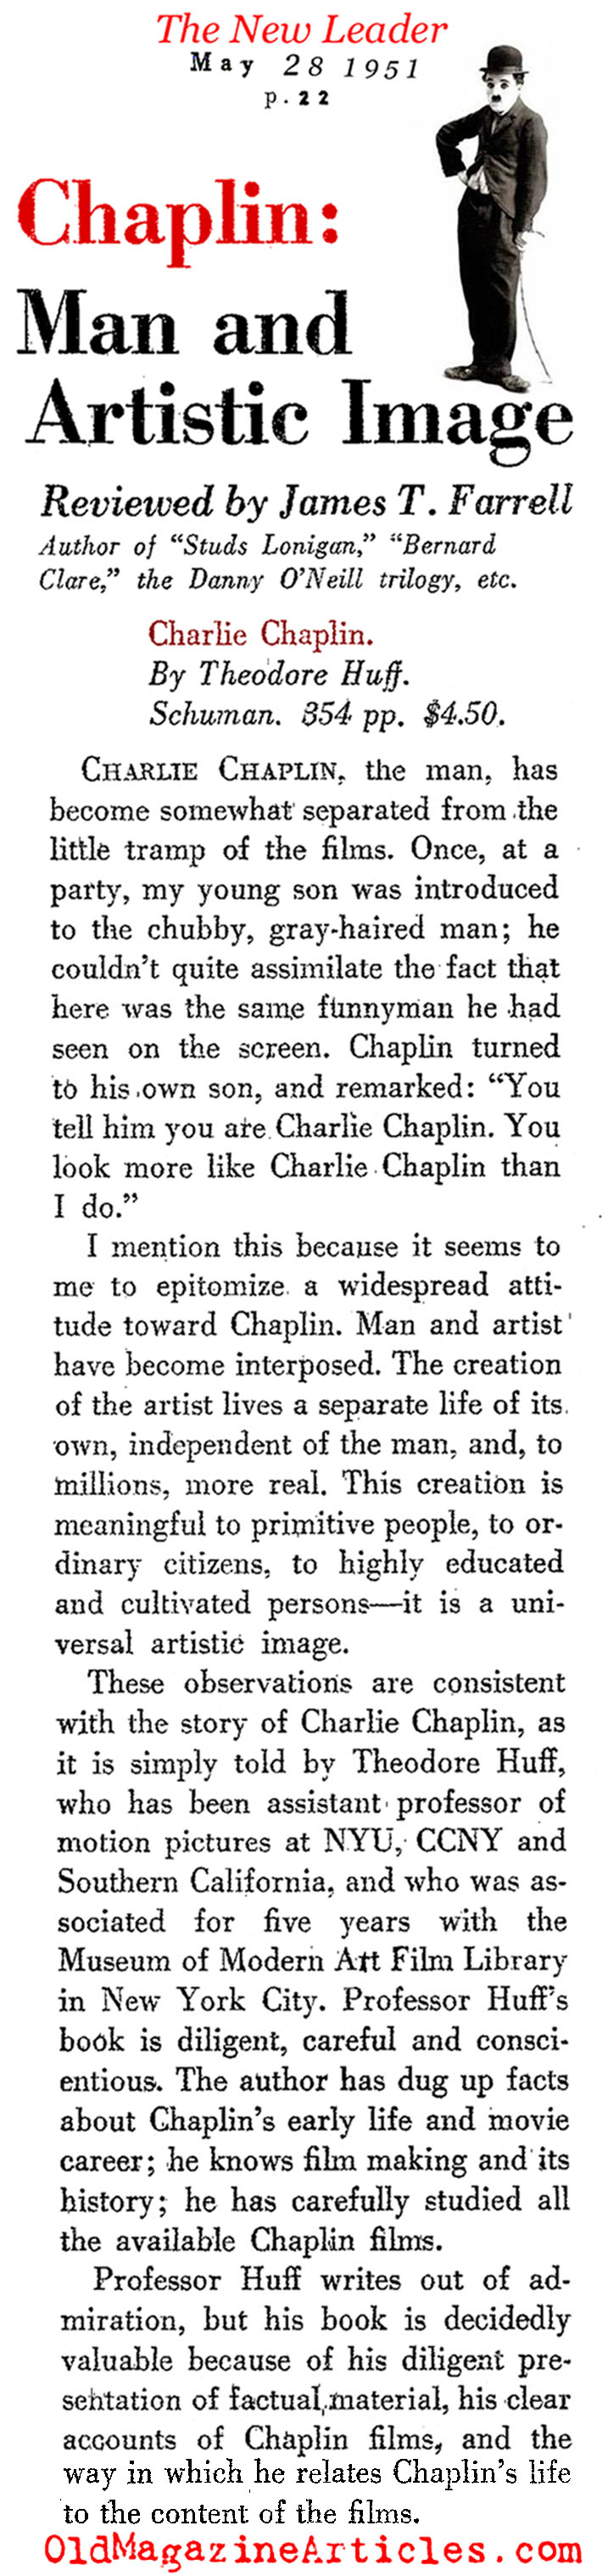 Charlie Chaplin Bio (New Leader Magazine, 1951)